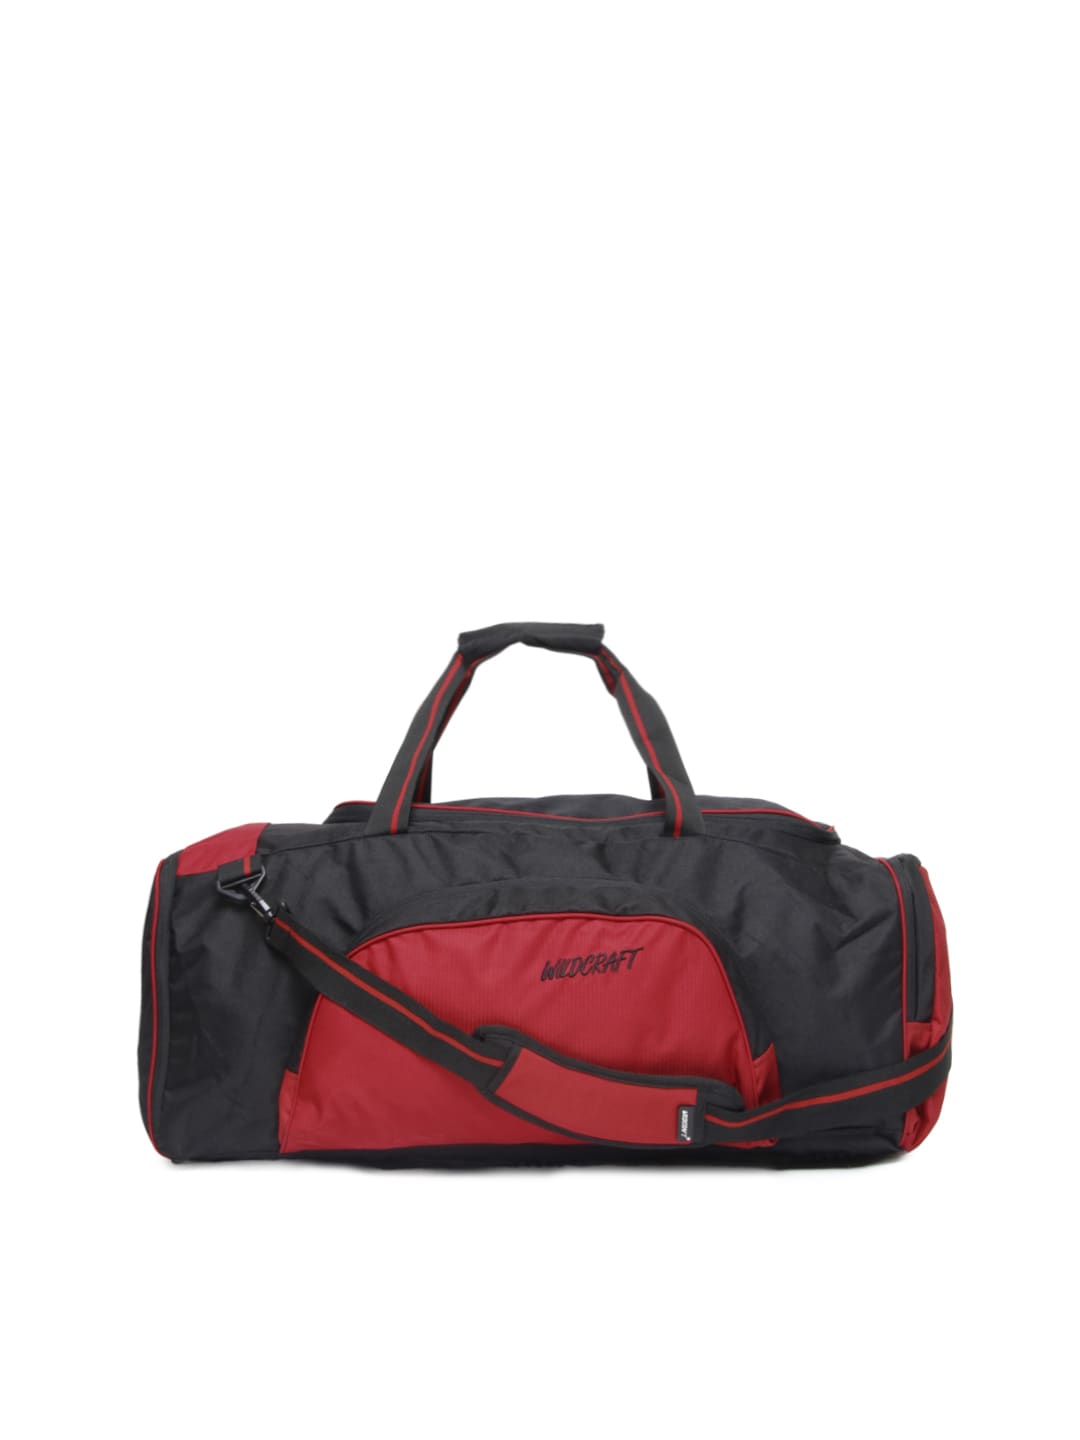 Wildcraft Unisex Black & Red Duffel Bag